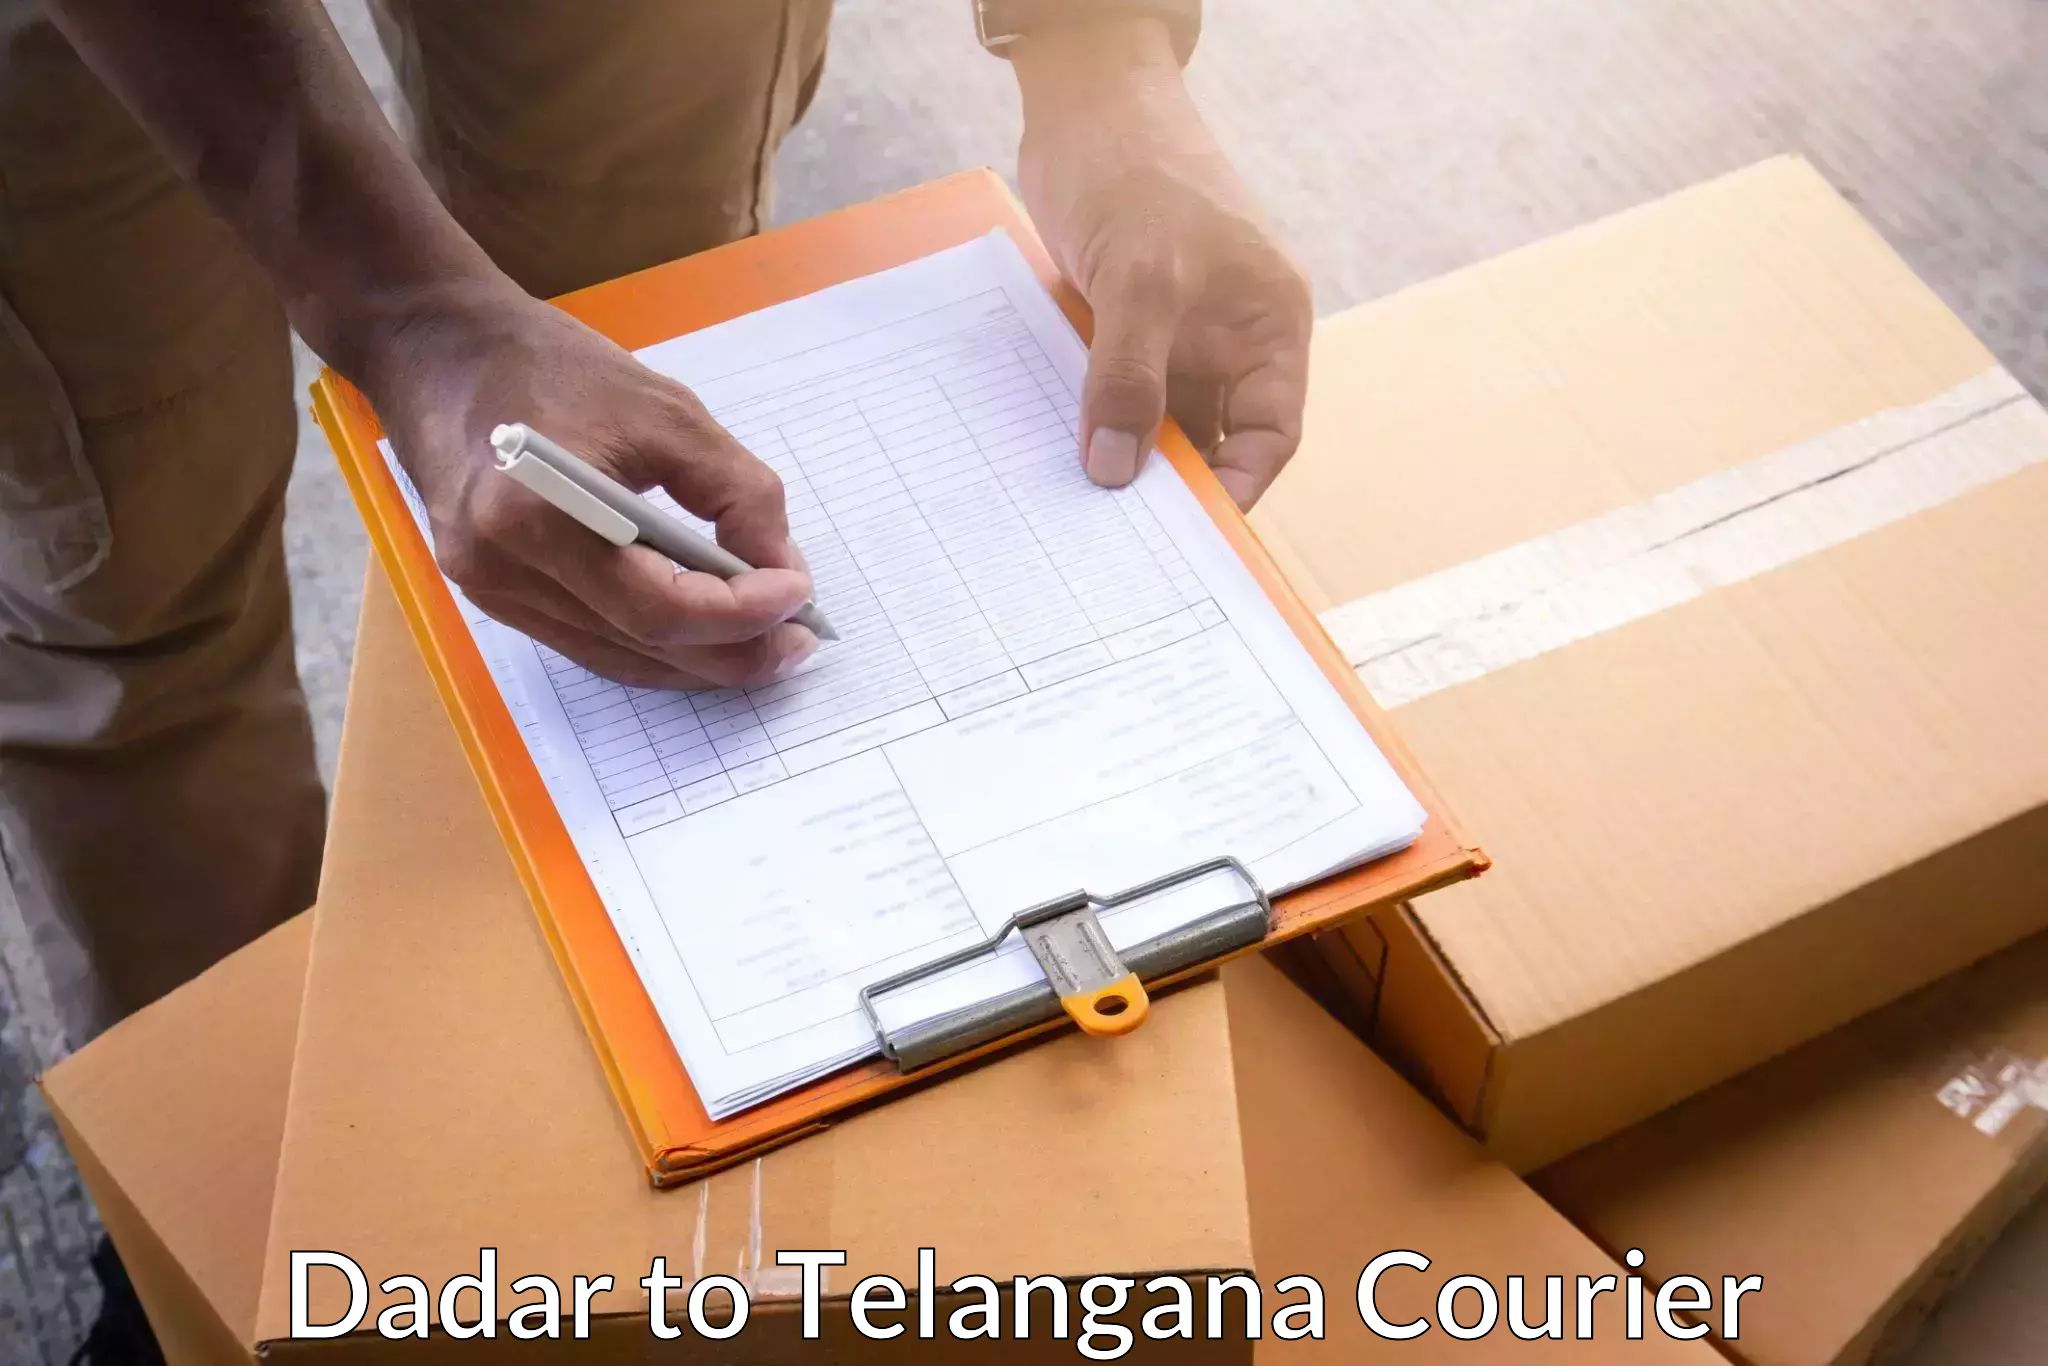 Bulk shipping discounts Dadar to Telangana